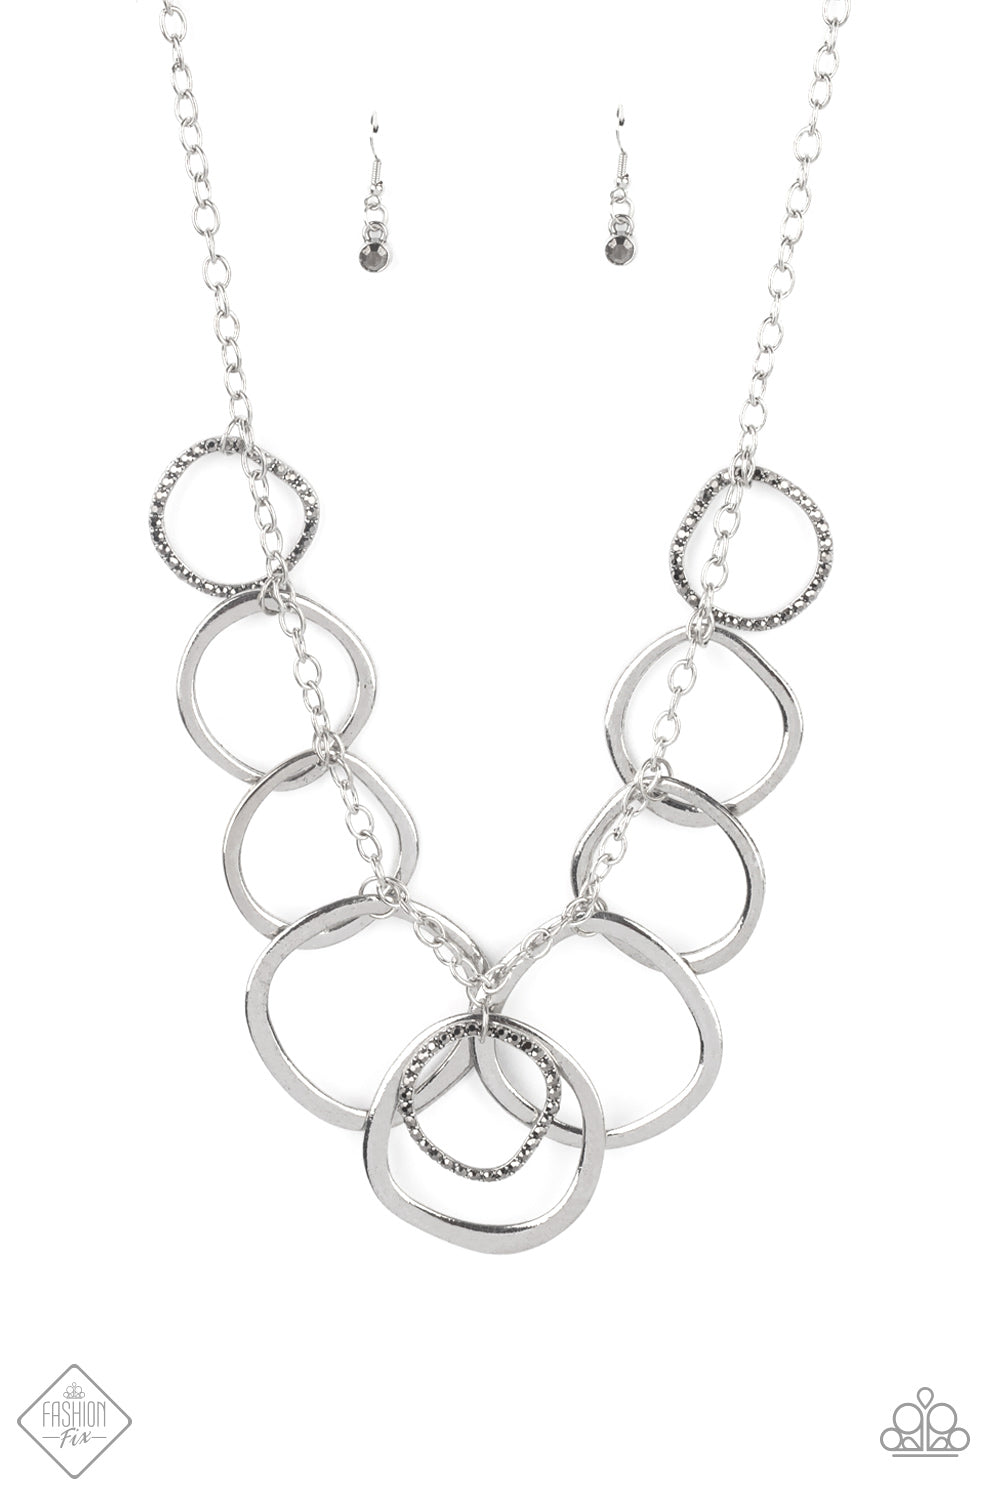 Dizzy With Desire - Silver necklace (June 2021 - Fashion Fix)